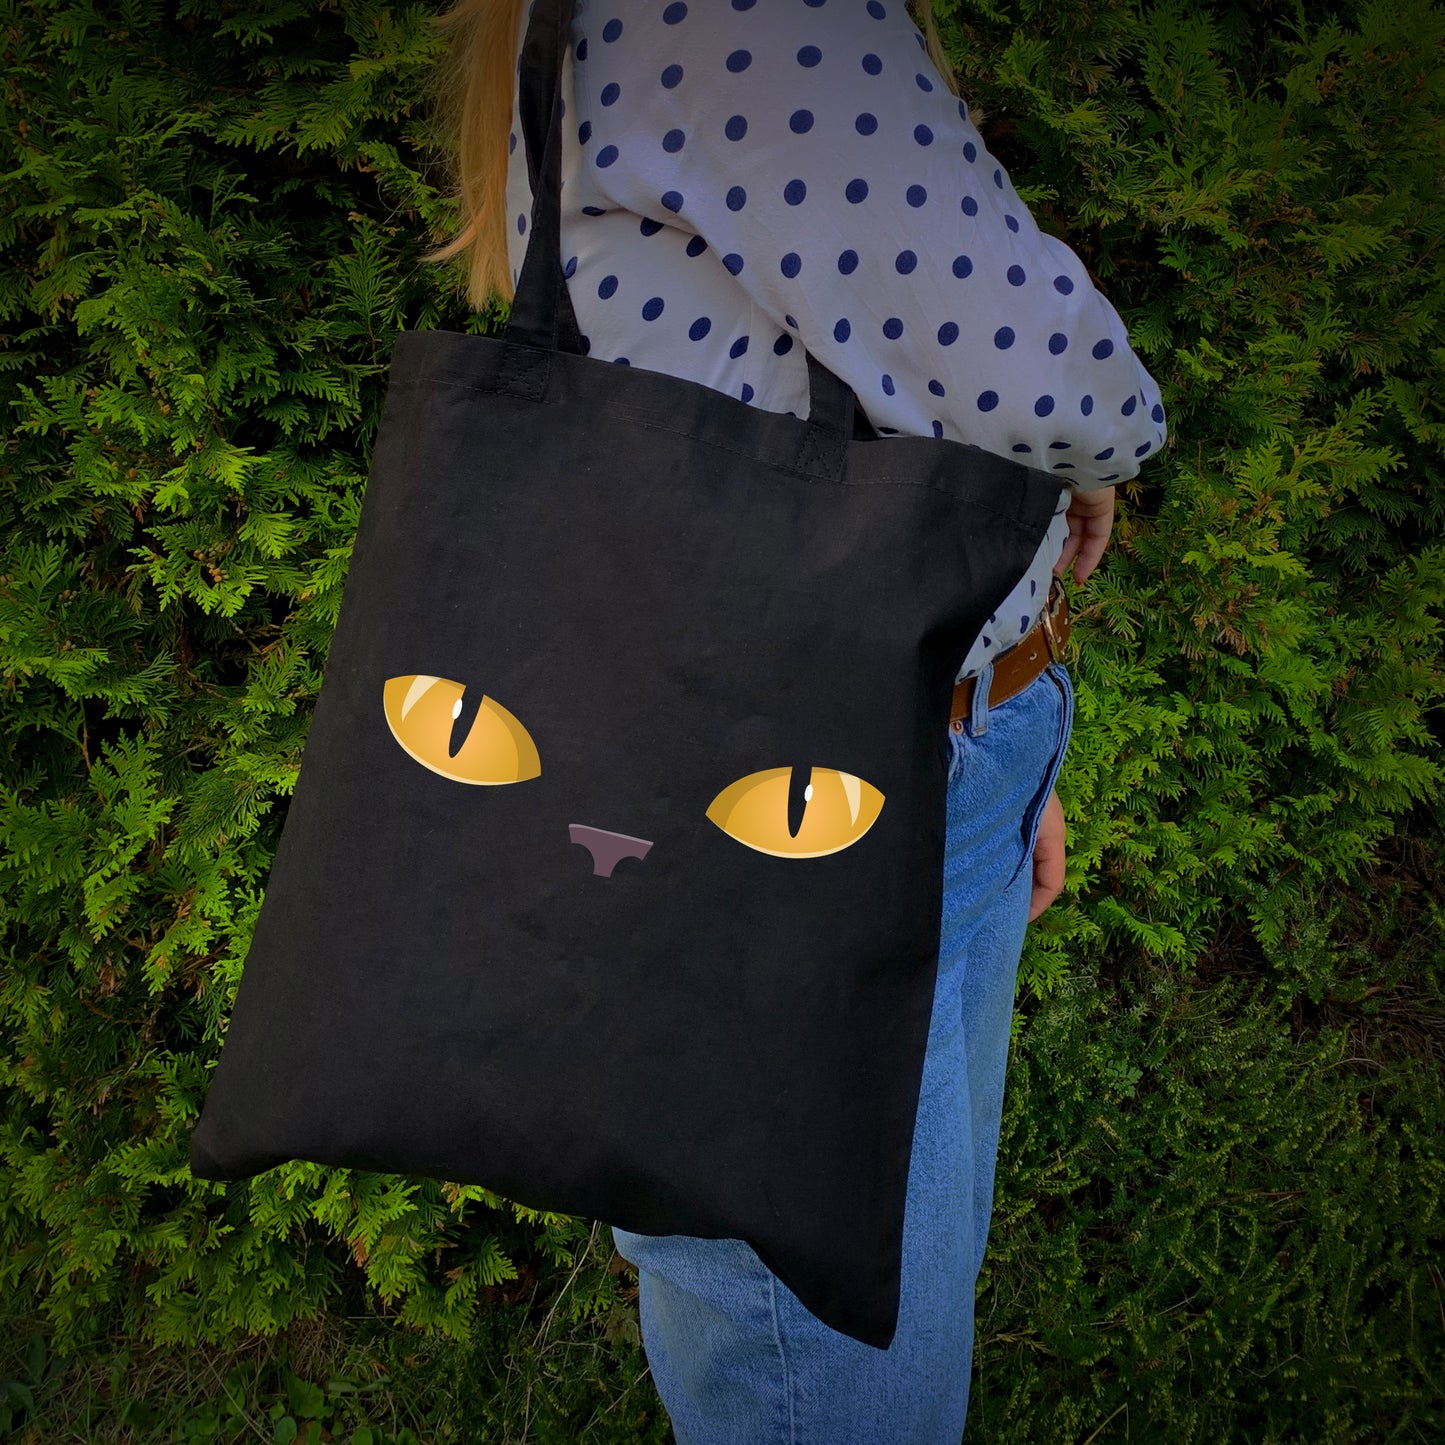 Curious Kitten Black Tote Bag